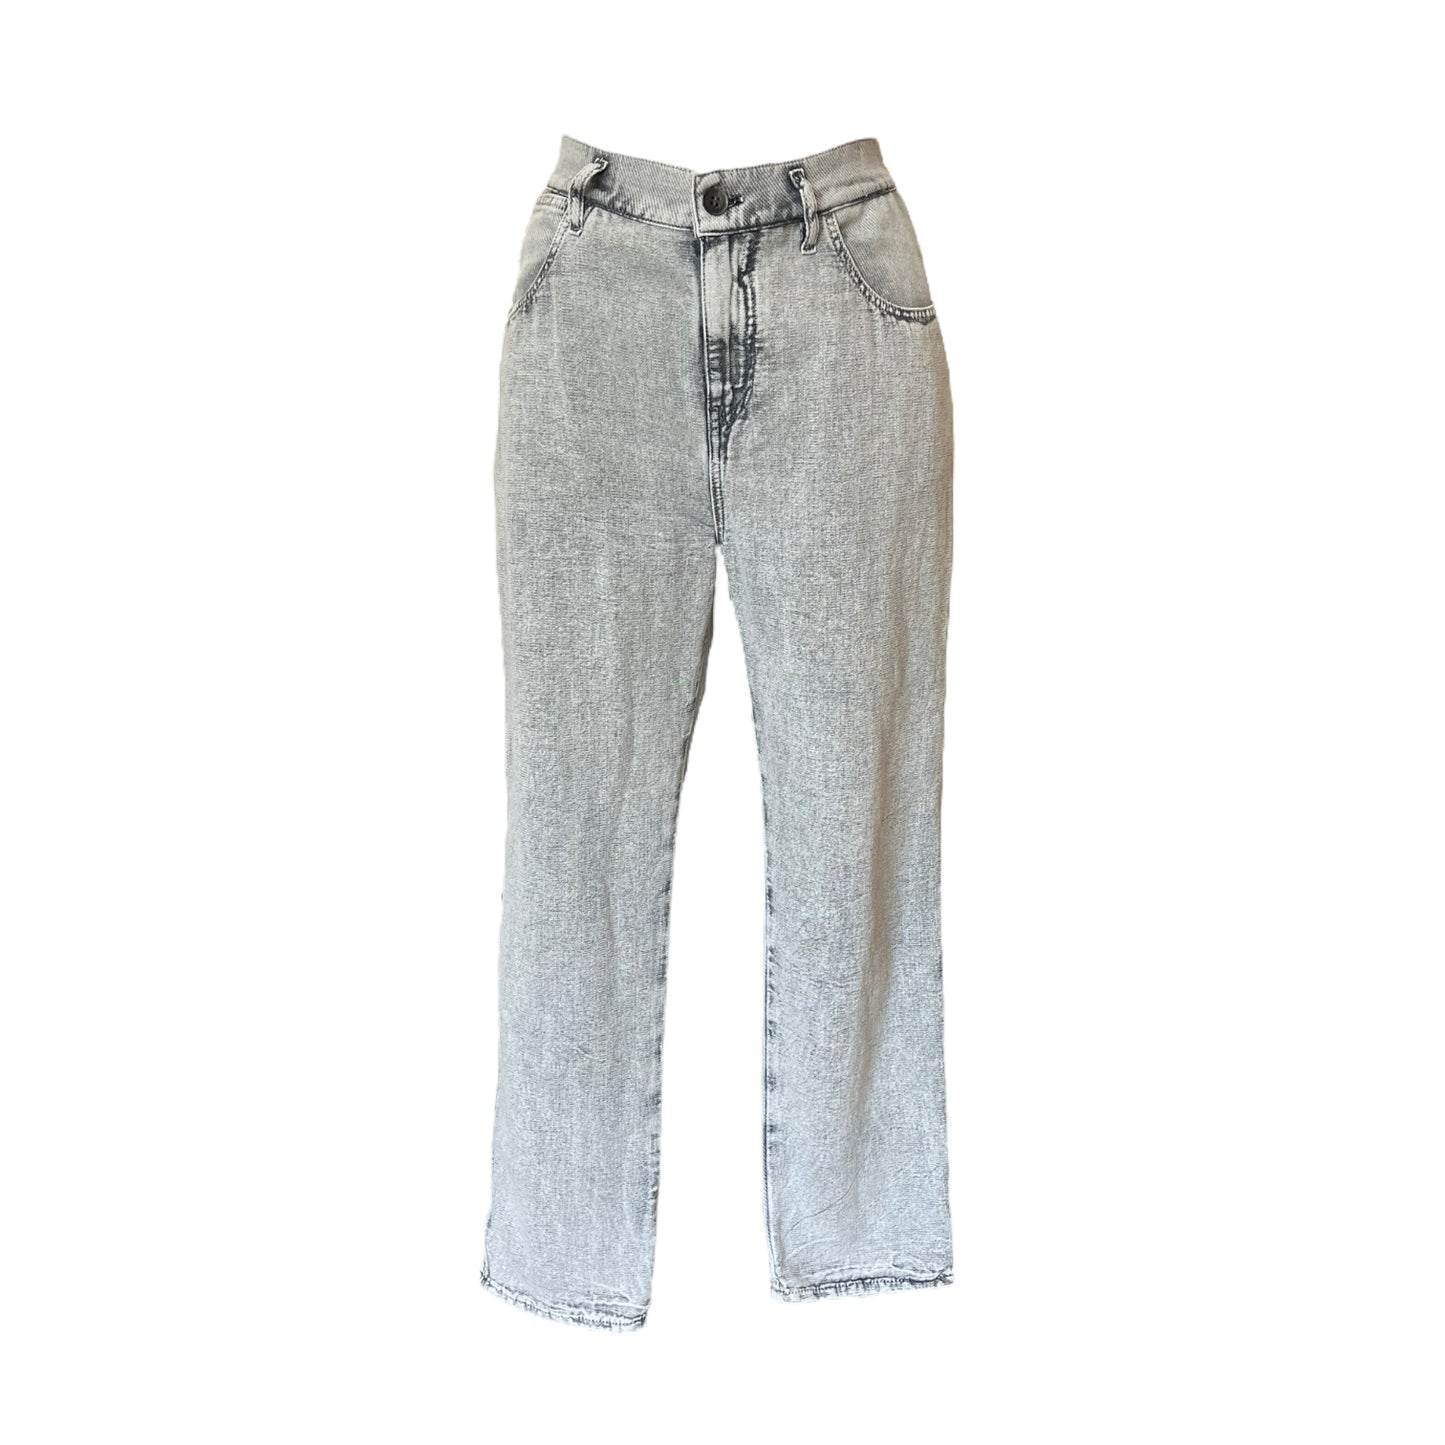 Annette Gortz Grey Jeans